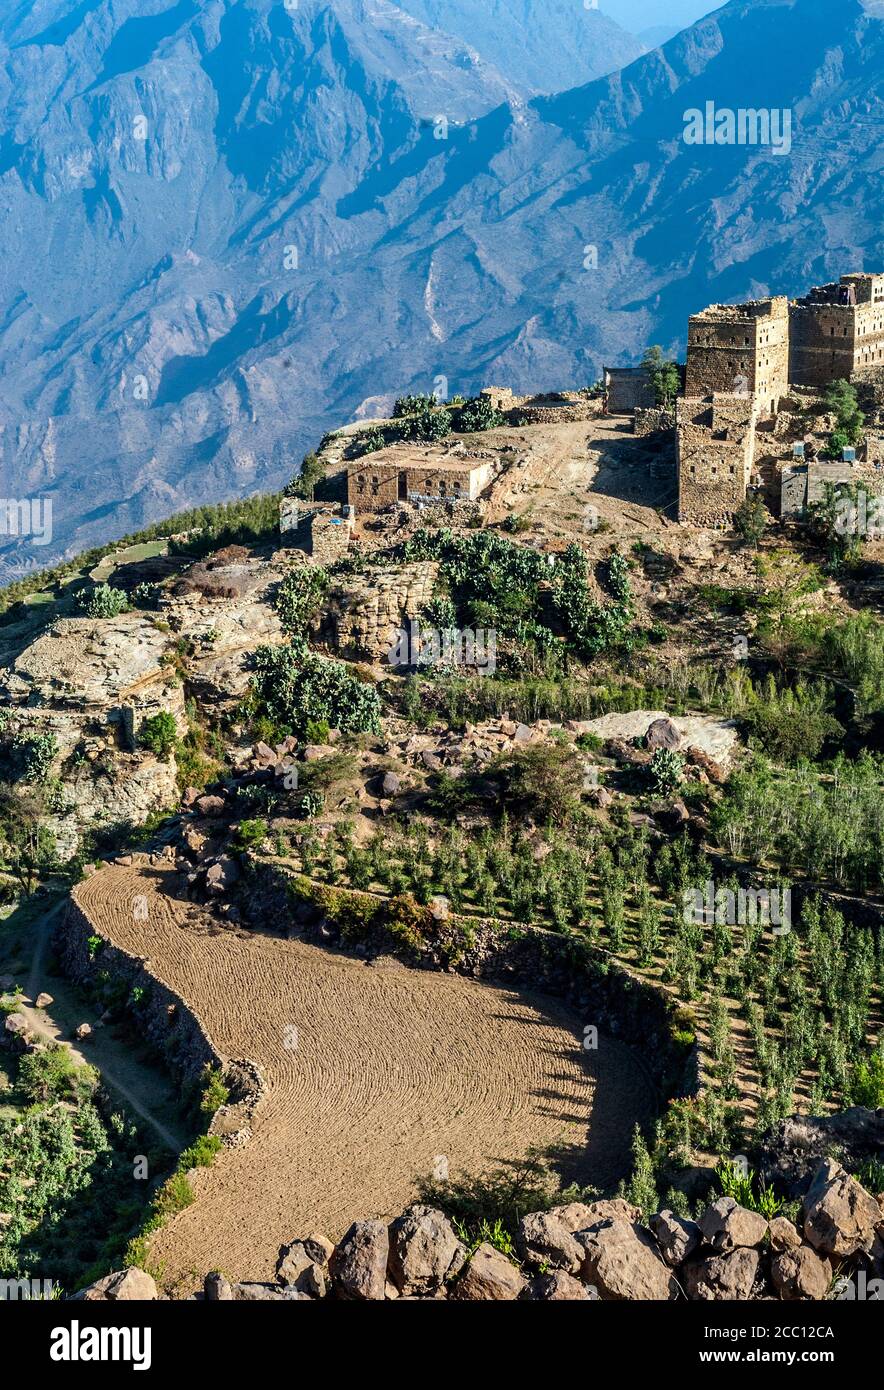 Middle East, Yemen, Center West, Jebel Harraz region (UNESCO World Heritage Tentative list), village and terrace cultivation (shooting 03/2007) Stock Photo